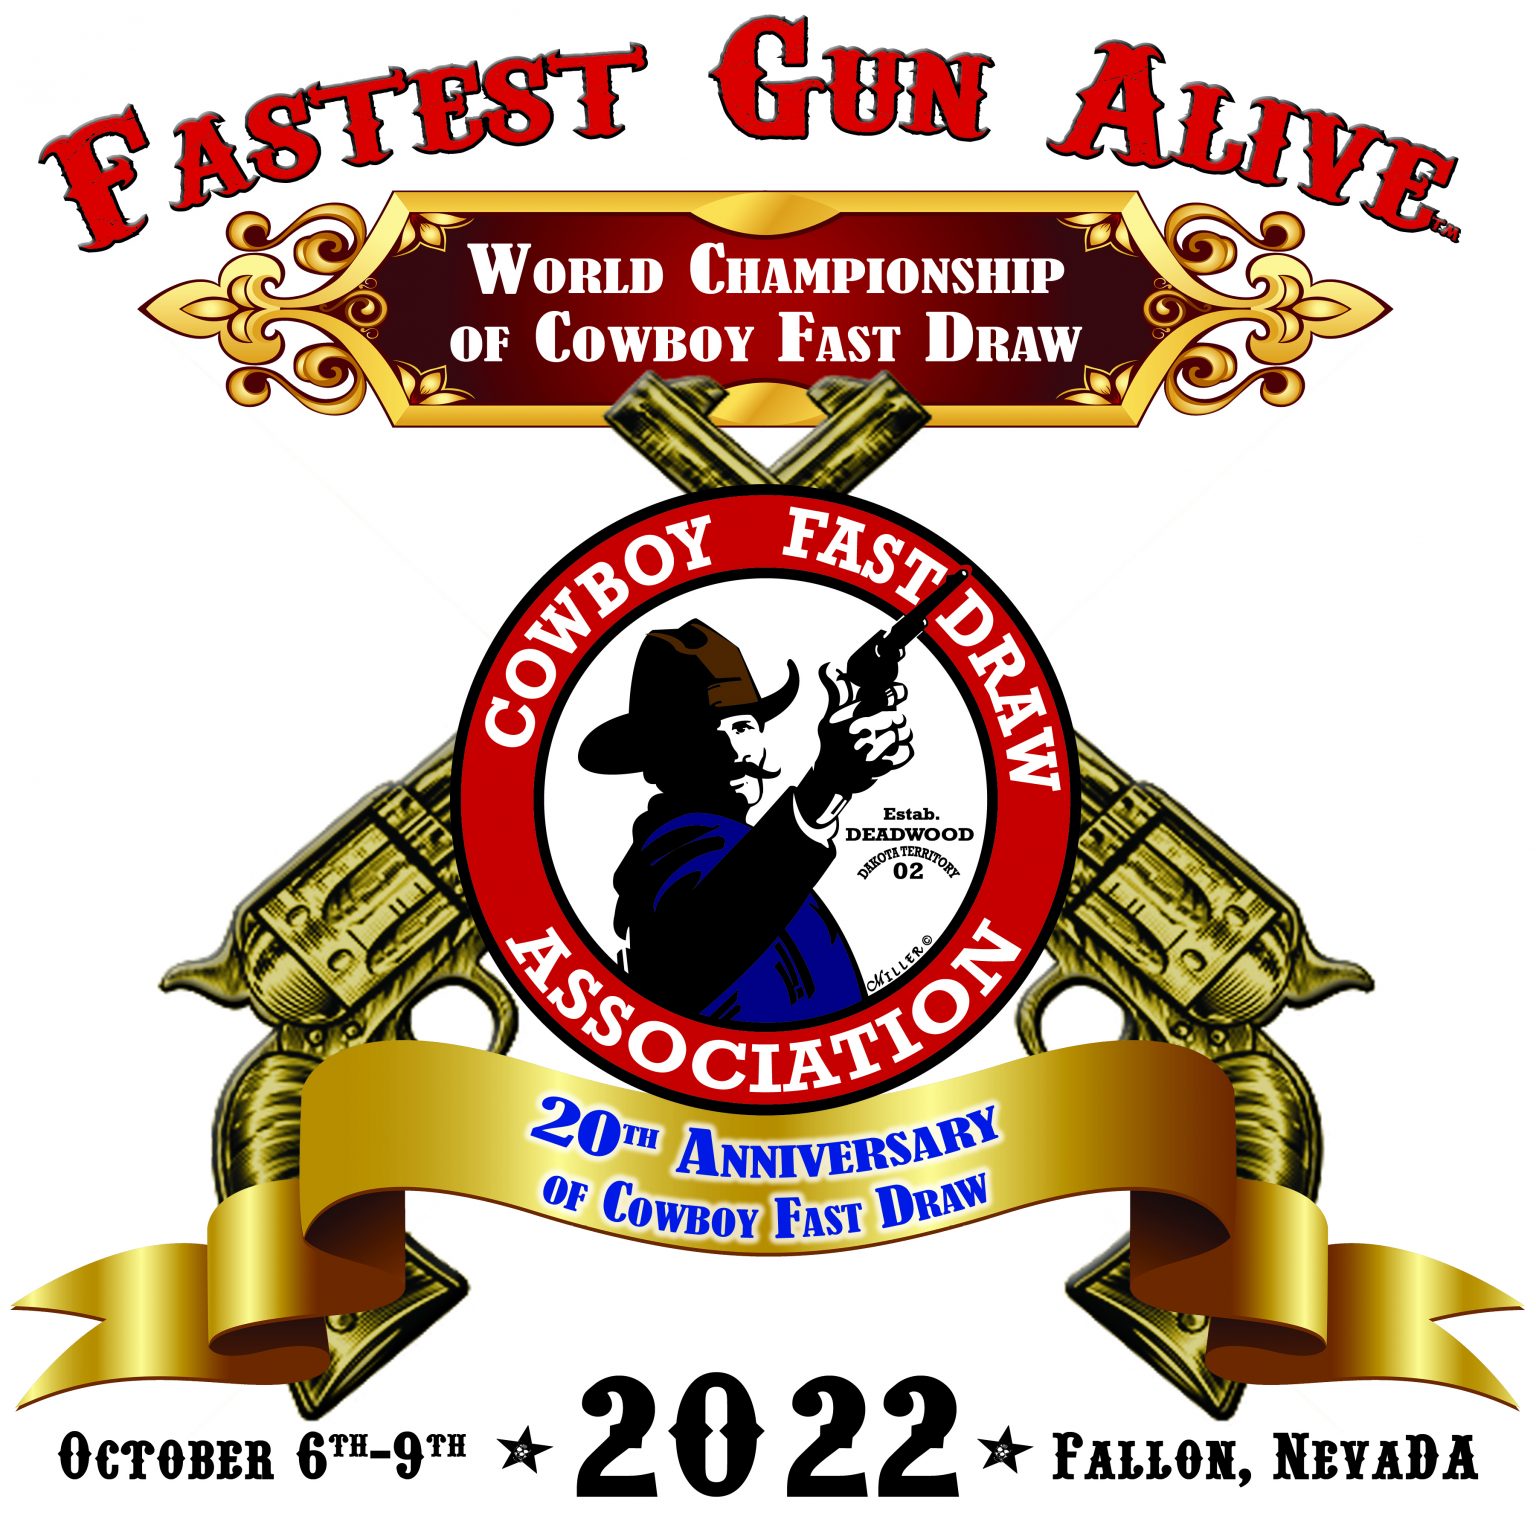 Fastest Gun Alive World Championship of Cowboy Fast Draw Rafter 3C Arena